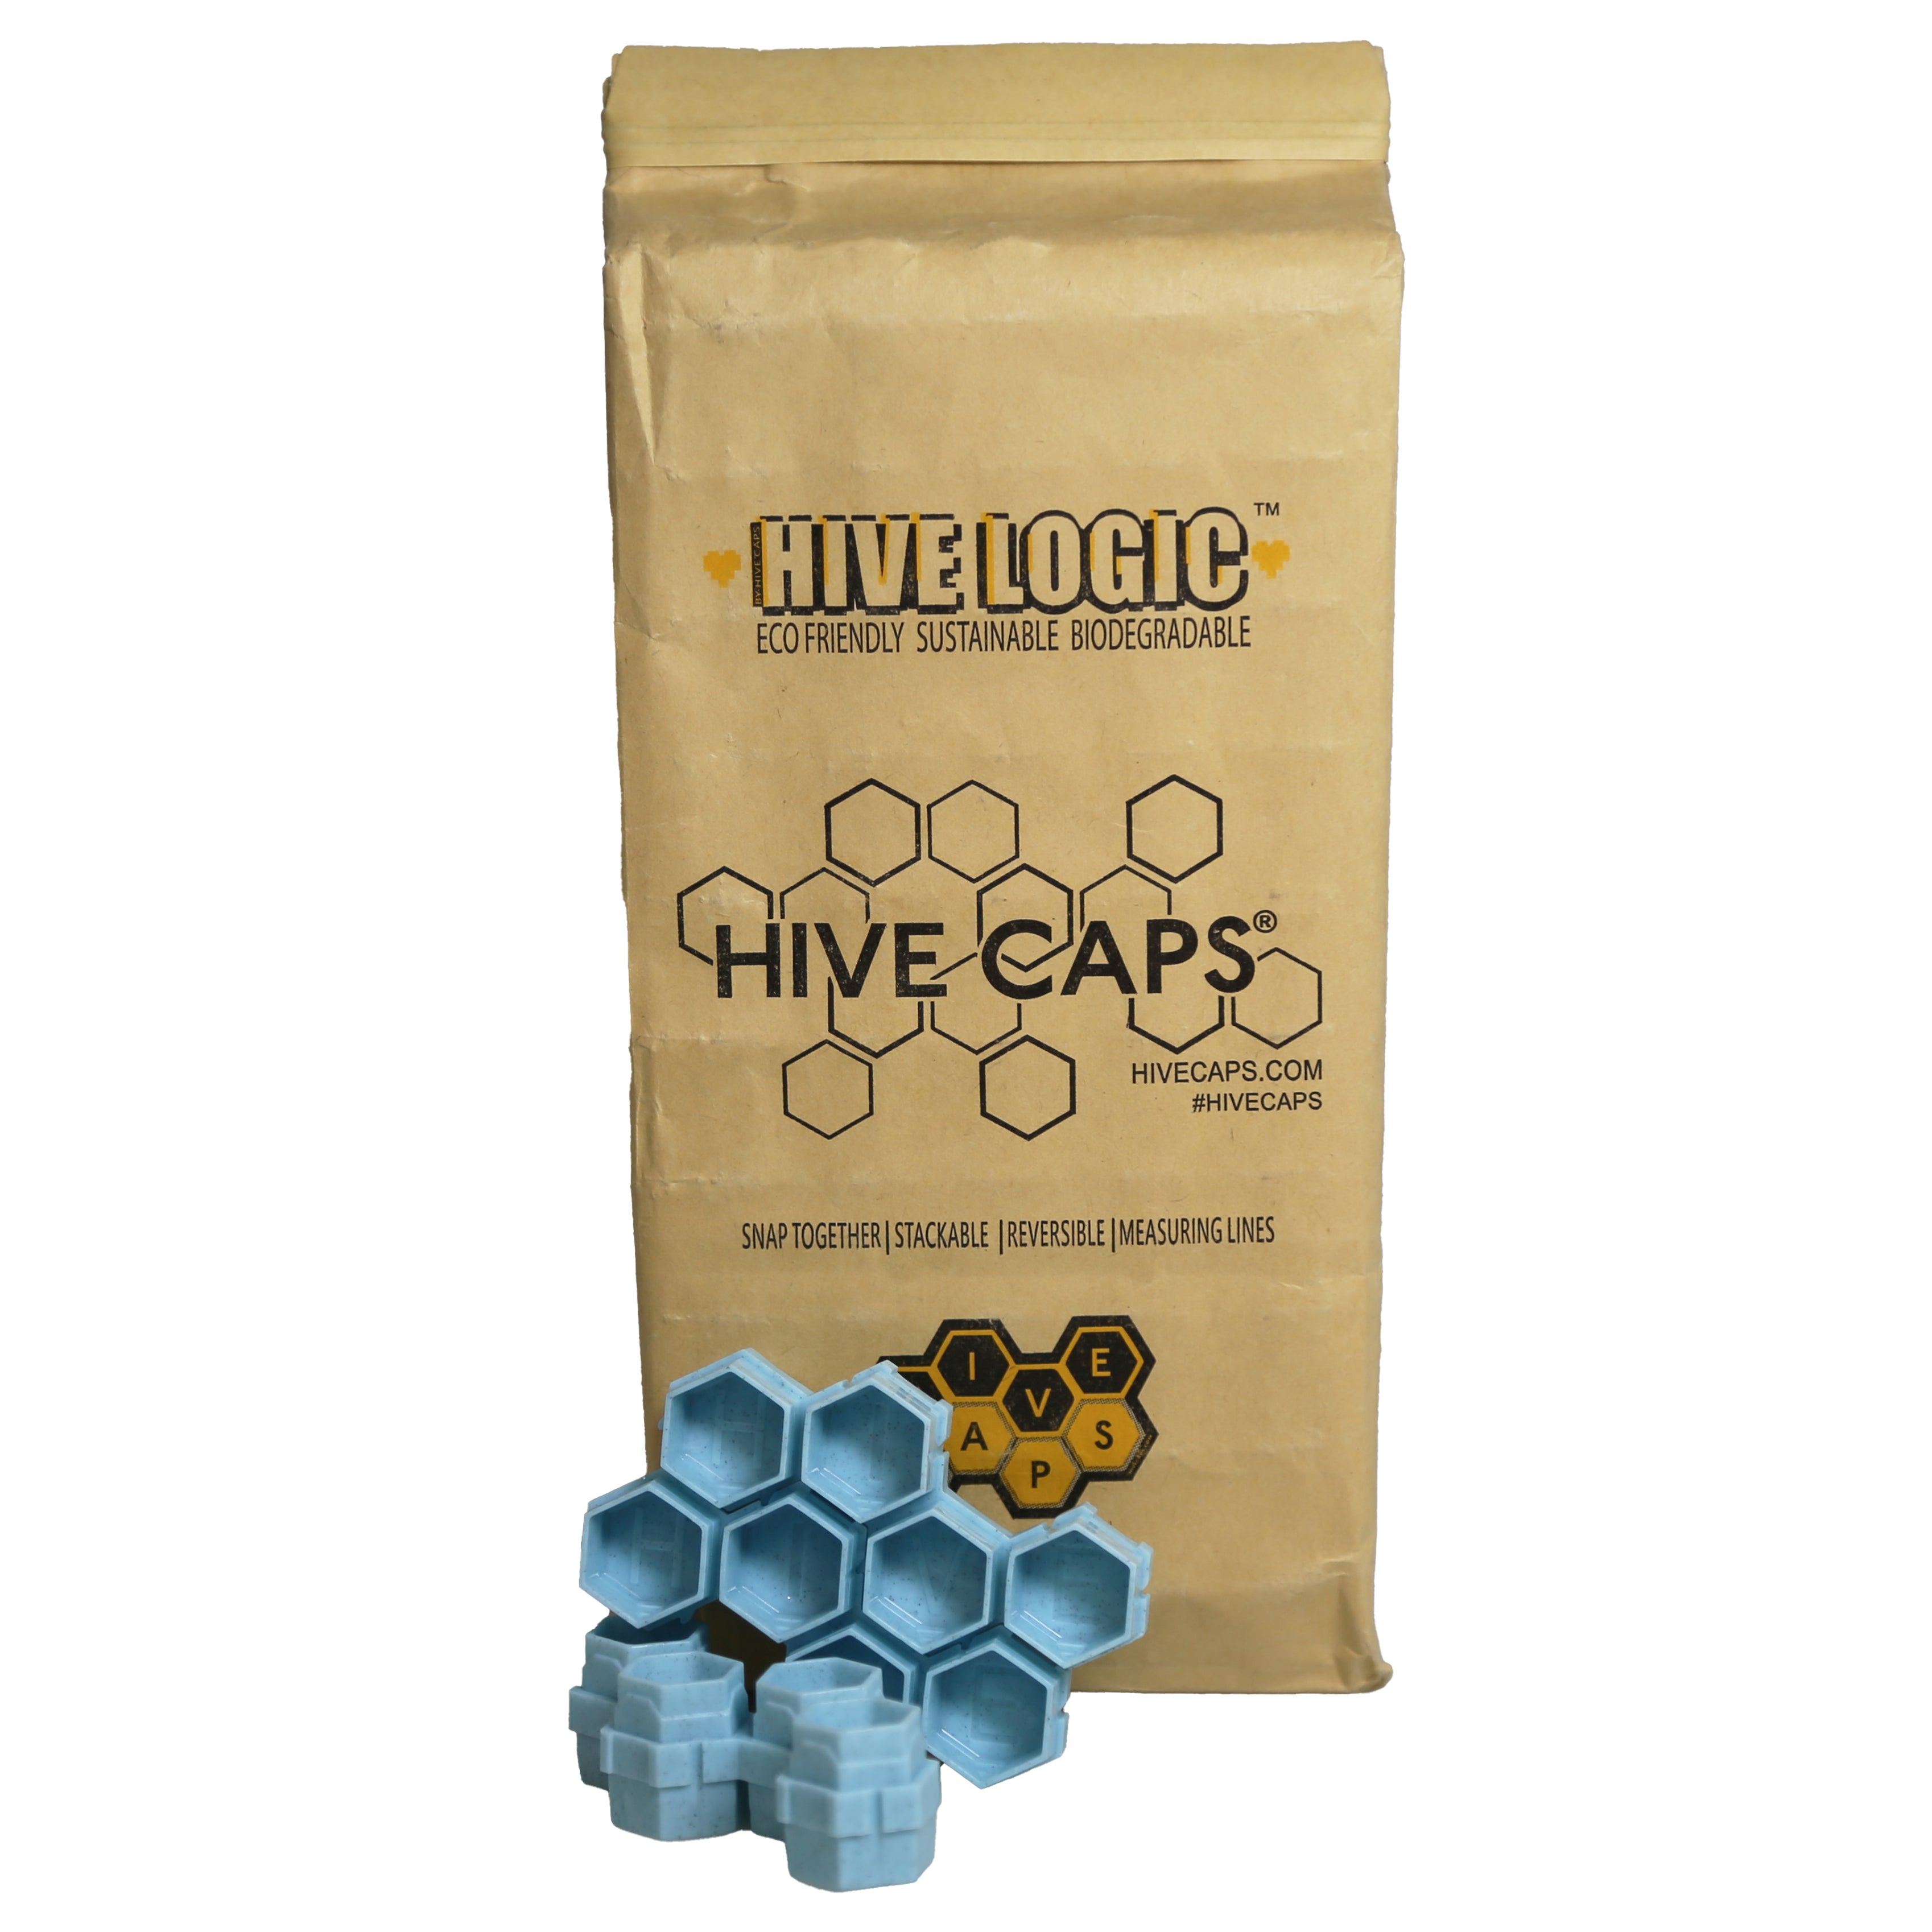 Hive Caps Eco